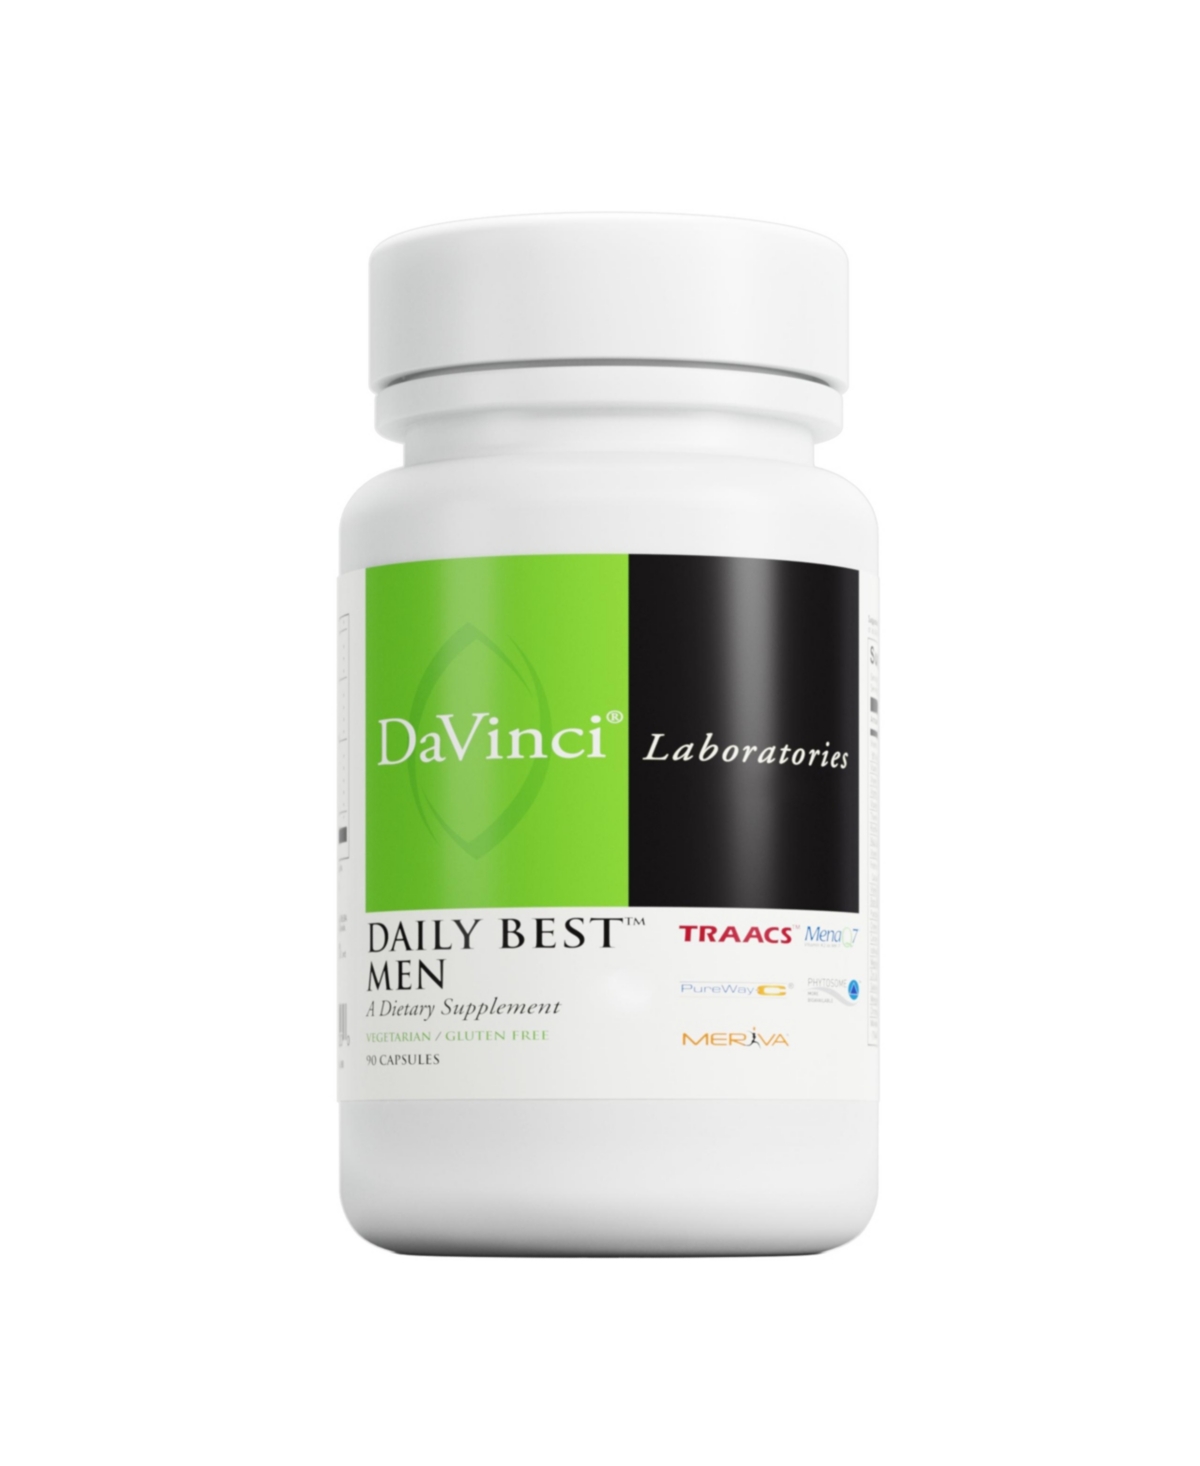 DaVinci Labs - Daily Best Men - A Dietary Supplement with Vitamin B6, Vitamin B12 Vitamin C, Vitamin K2, and More - Vegetarian, G